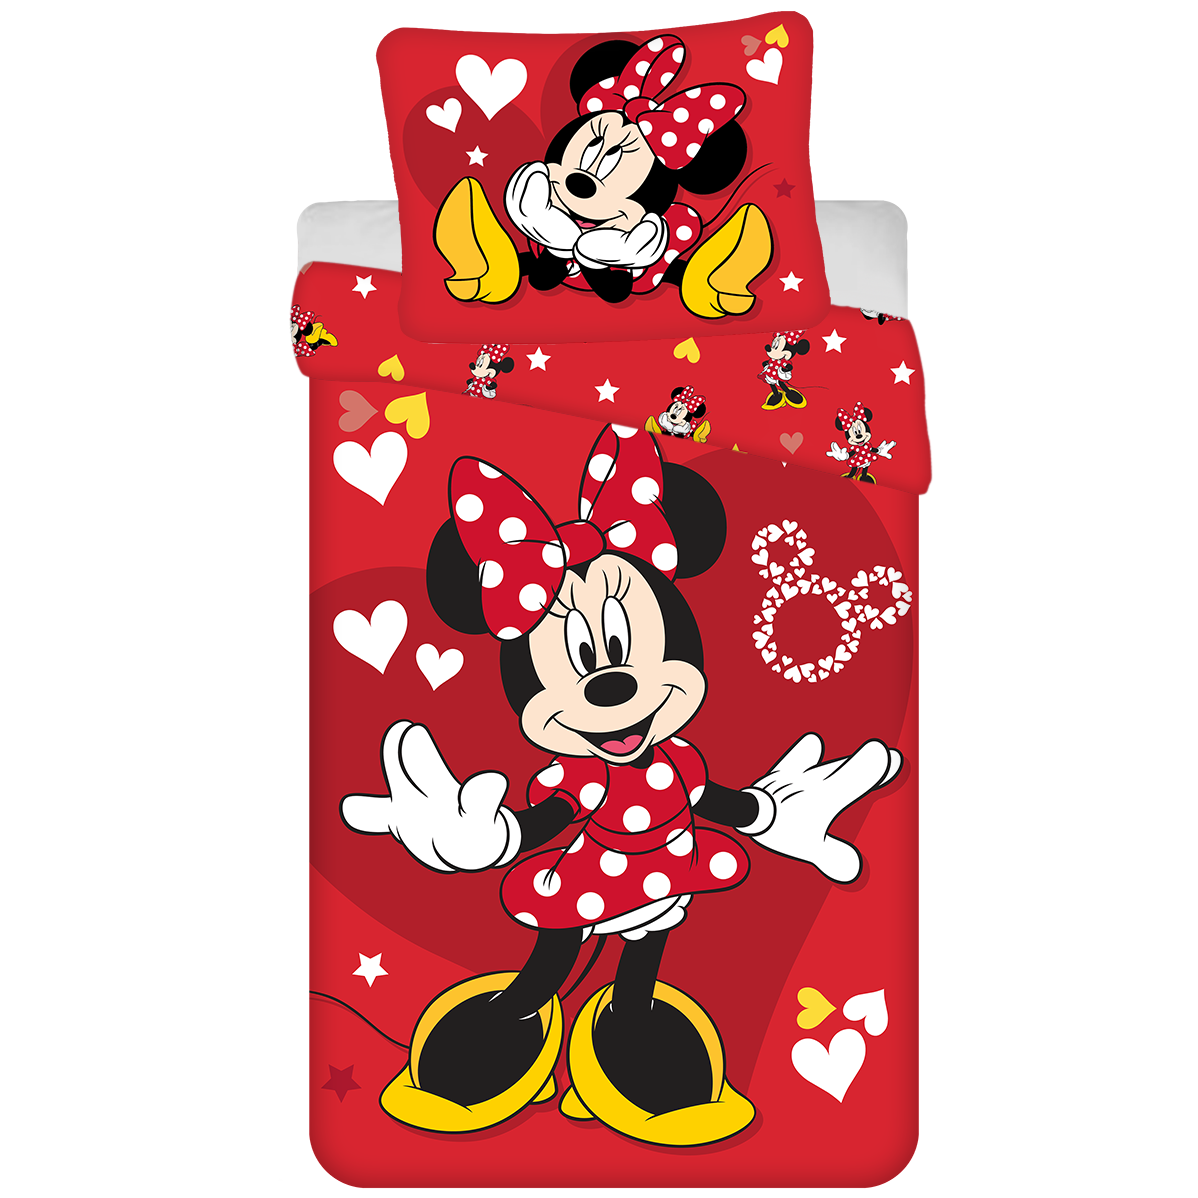 Disney Minnie Mouse Dekbedovertrek hearts - 140 x 200 cm - Katoen rood pre order